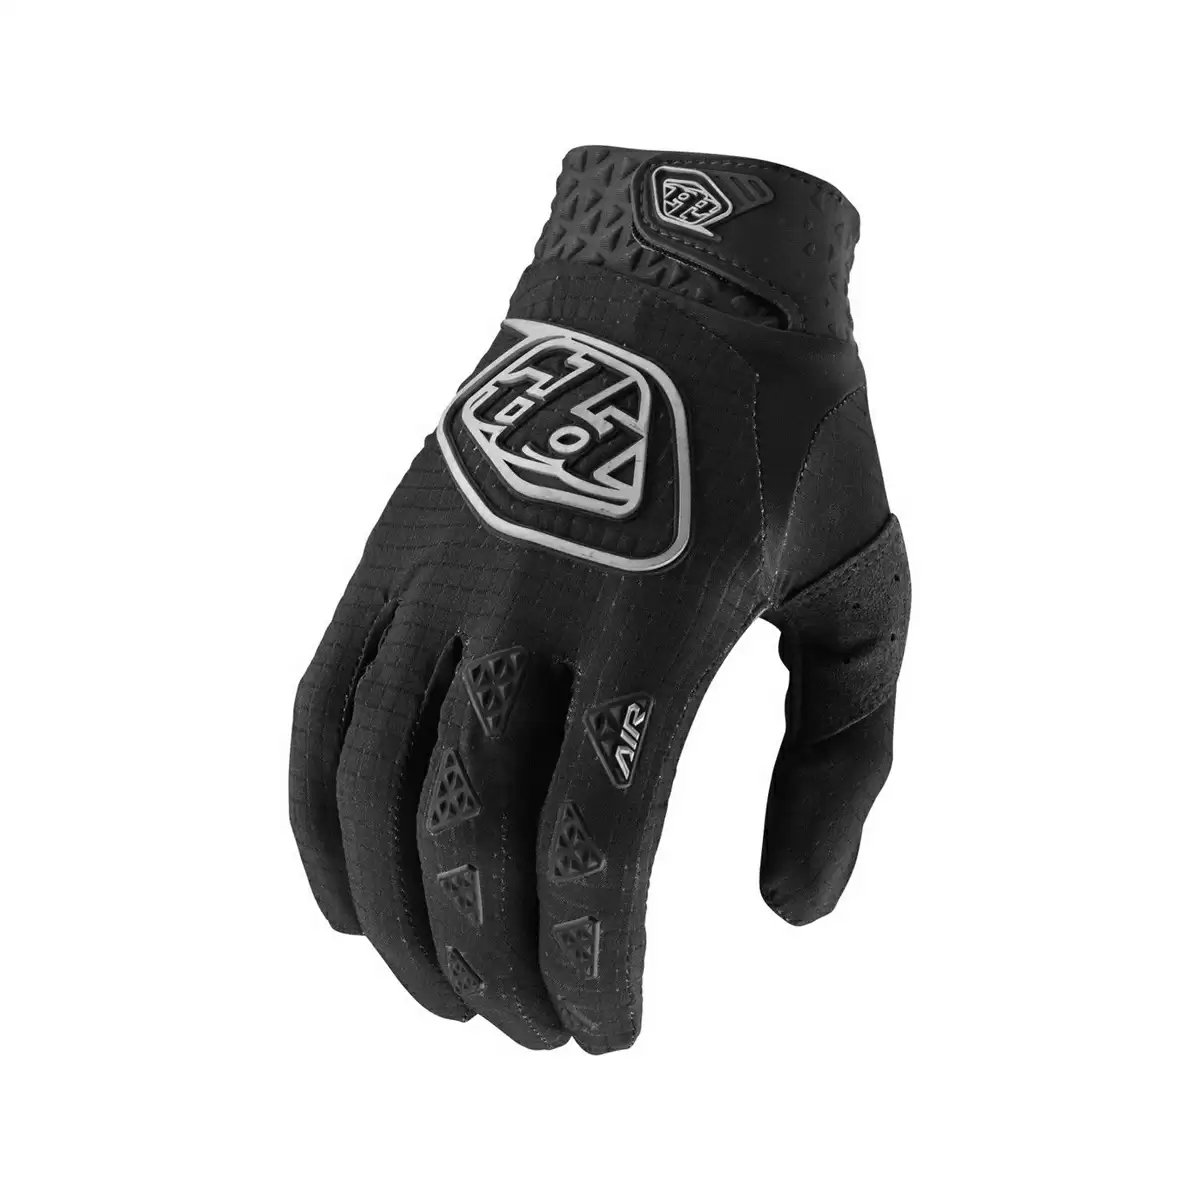 MTB-Handschuhe Air-Handschuhe schwarz Größe XXL #1